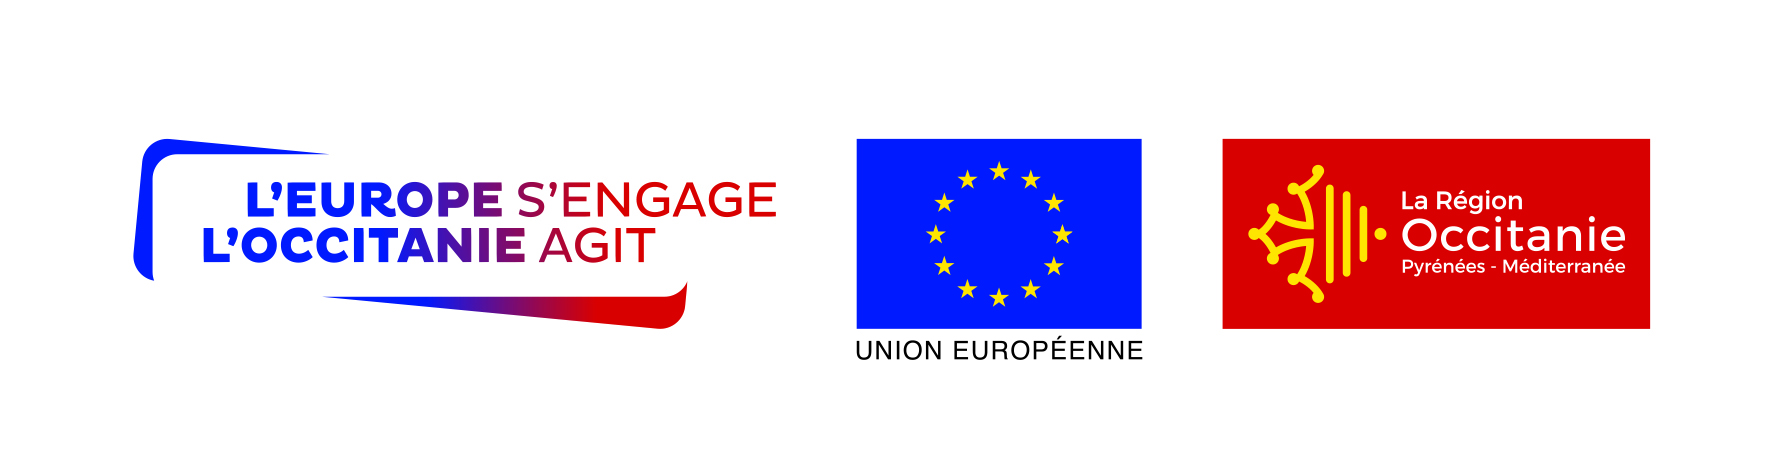 Union Européenne et Region Occitanie